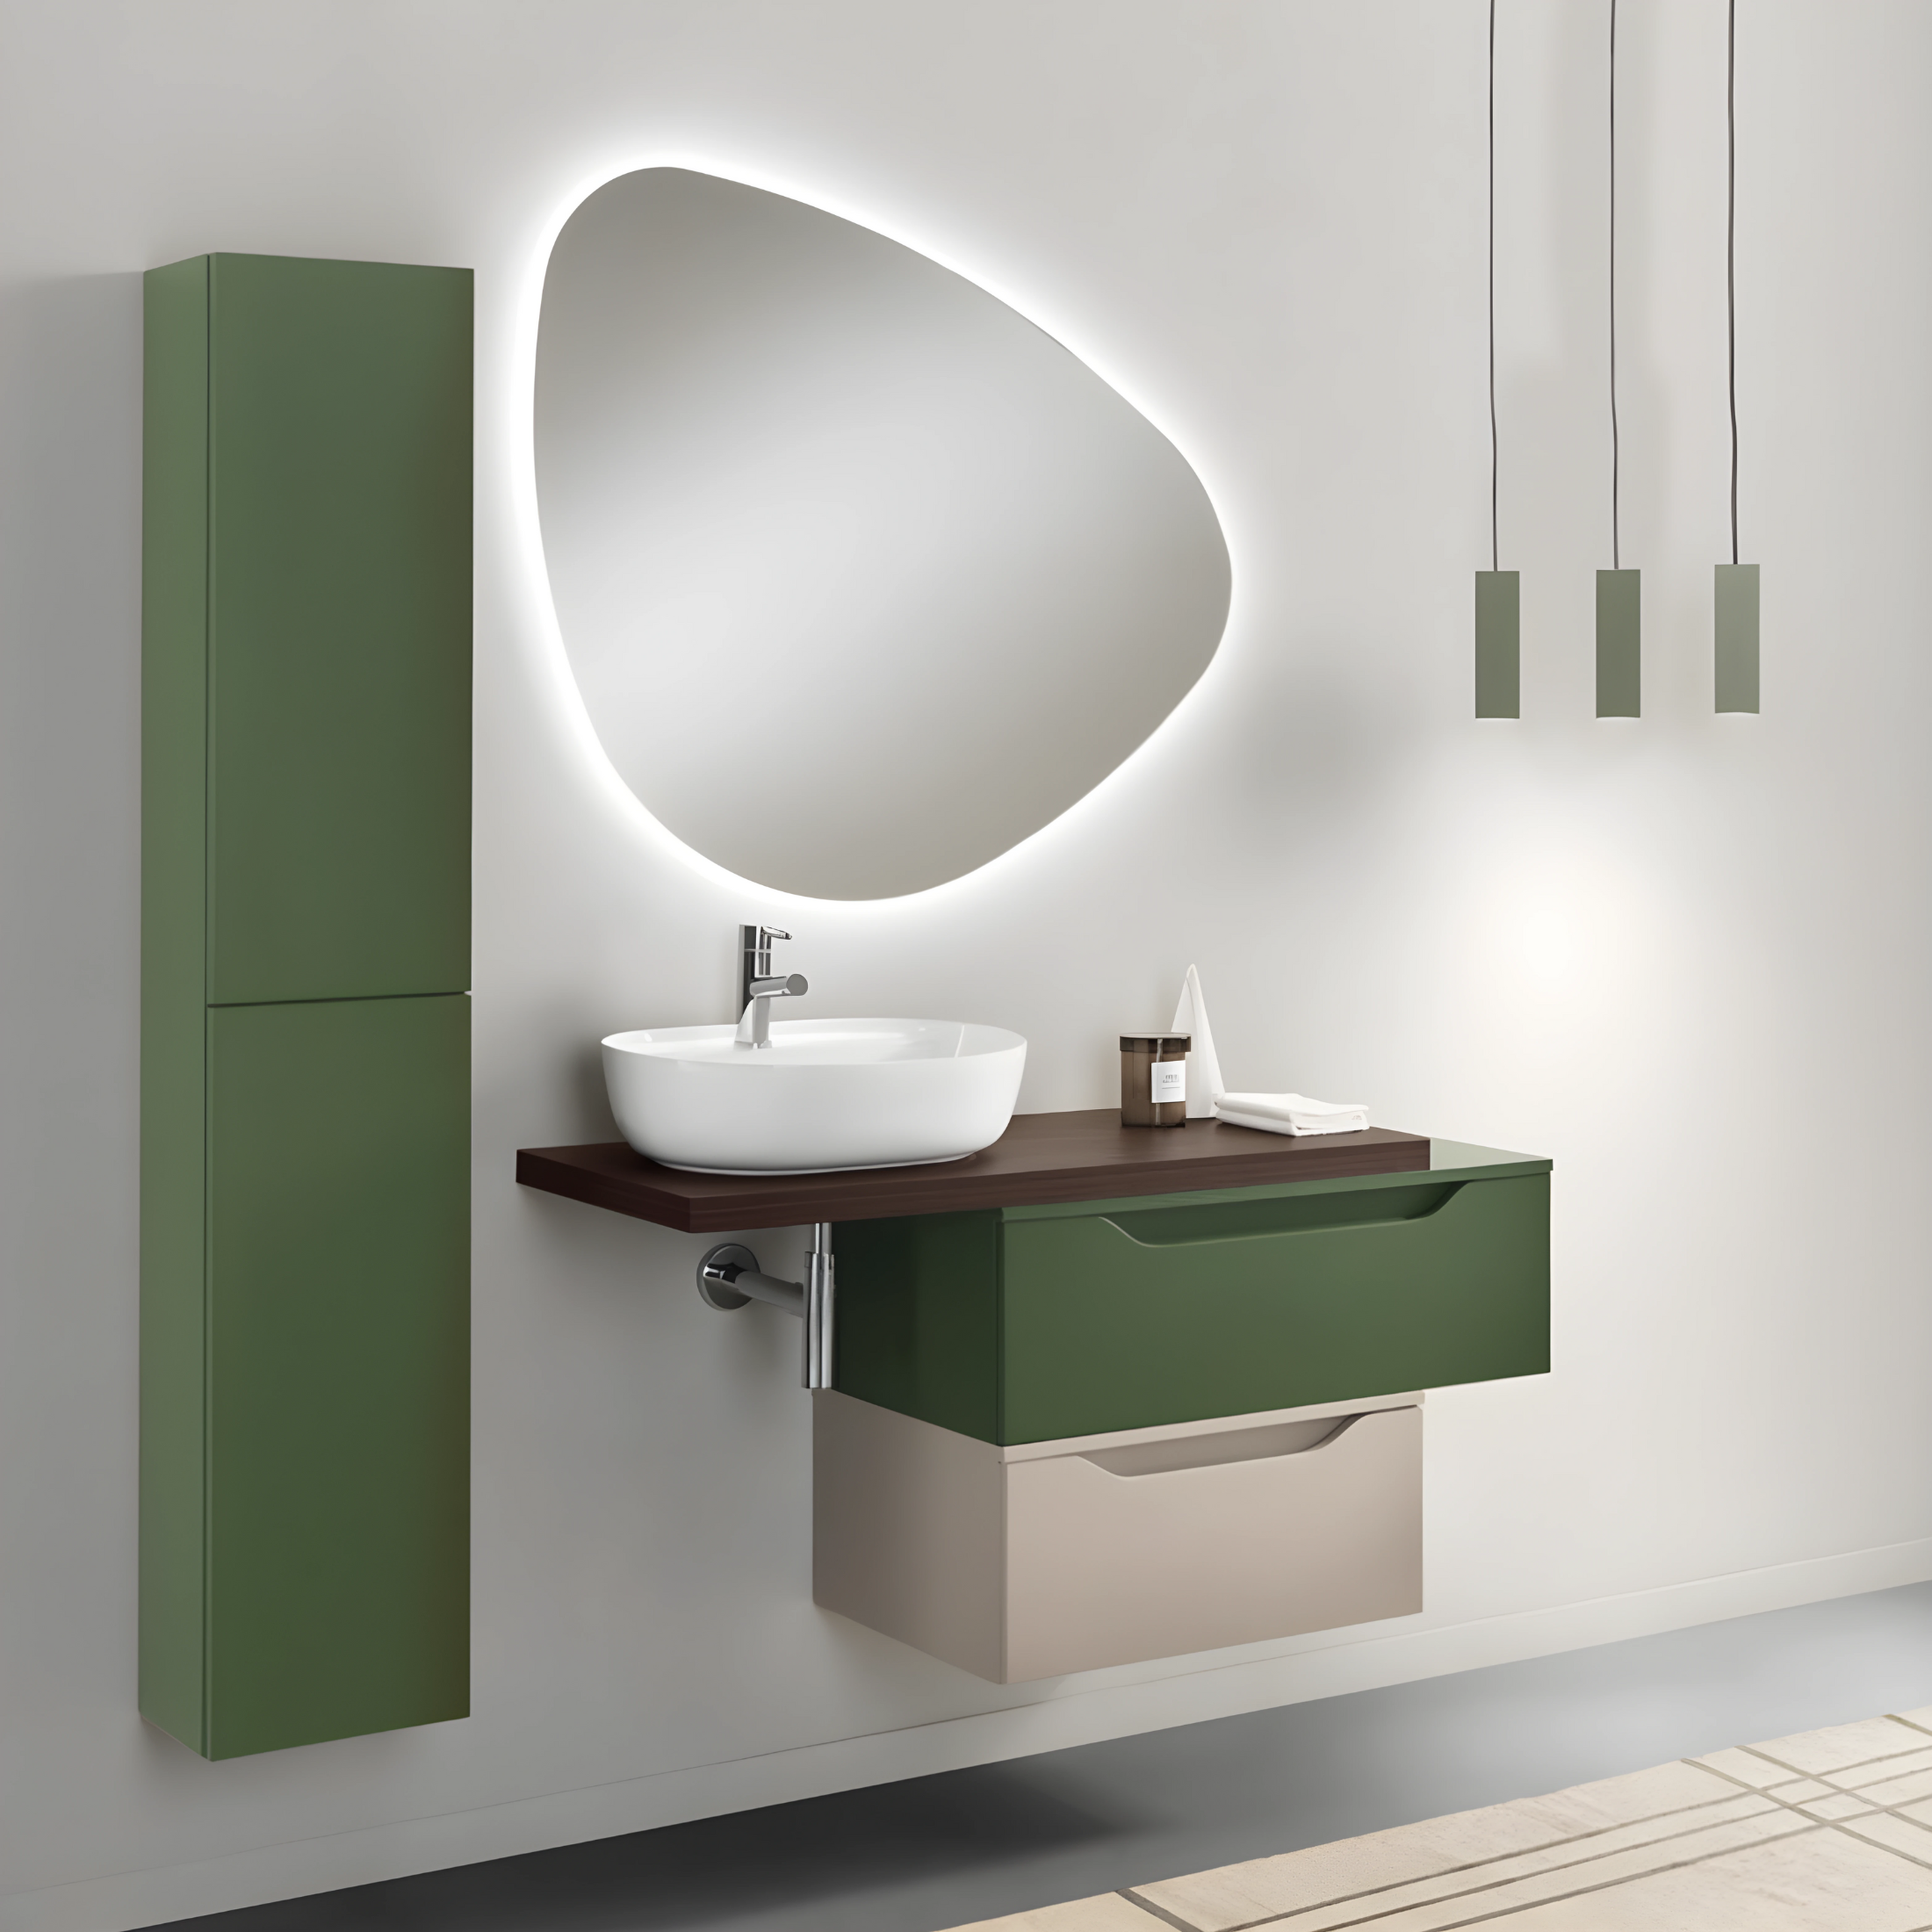 Mueble de baño suspendido ya montado "Mixi b" 2 cajones, espejo led, lavabo y columna